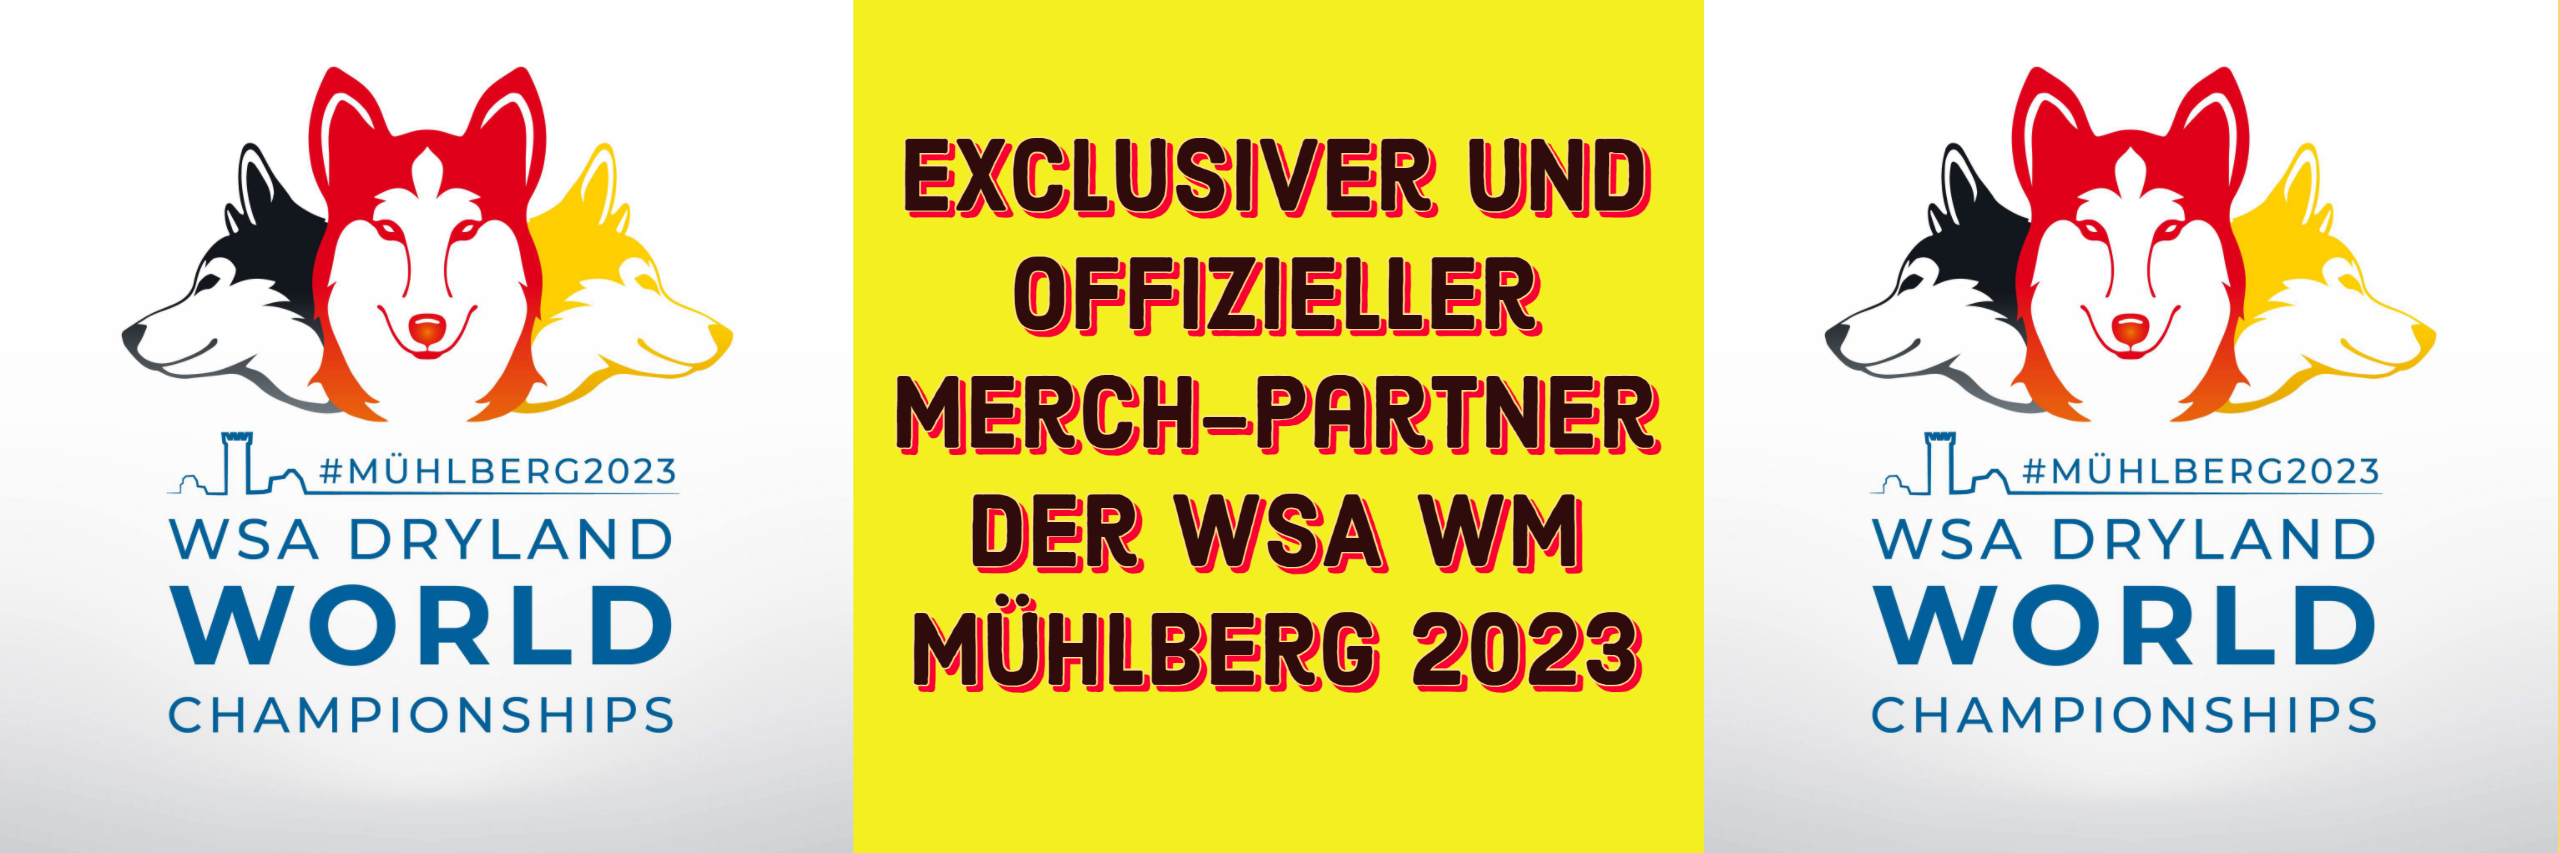 Bobeks Magic Fire Devil Store - offizieller Partner der WSA WM Mühlberg 2023